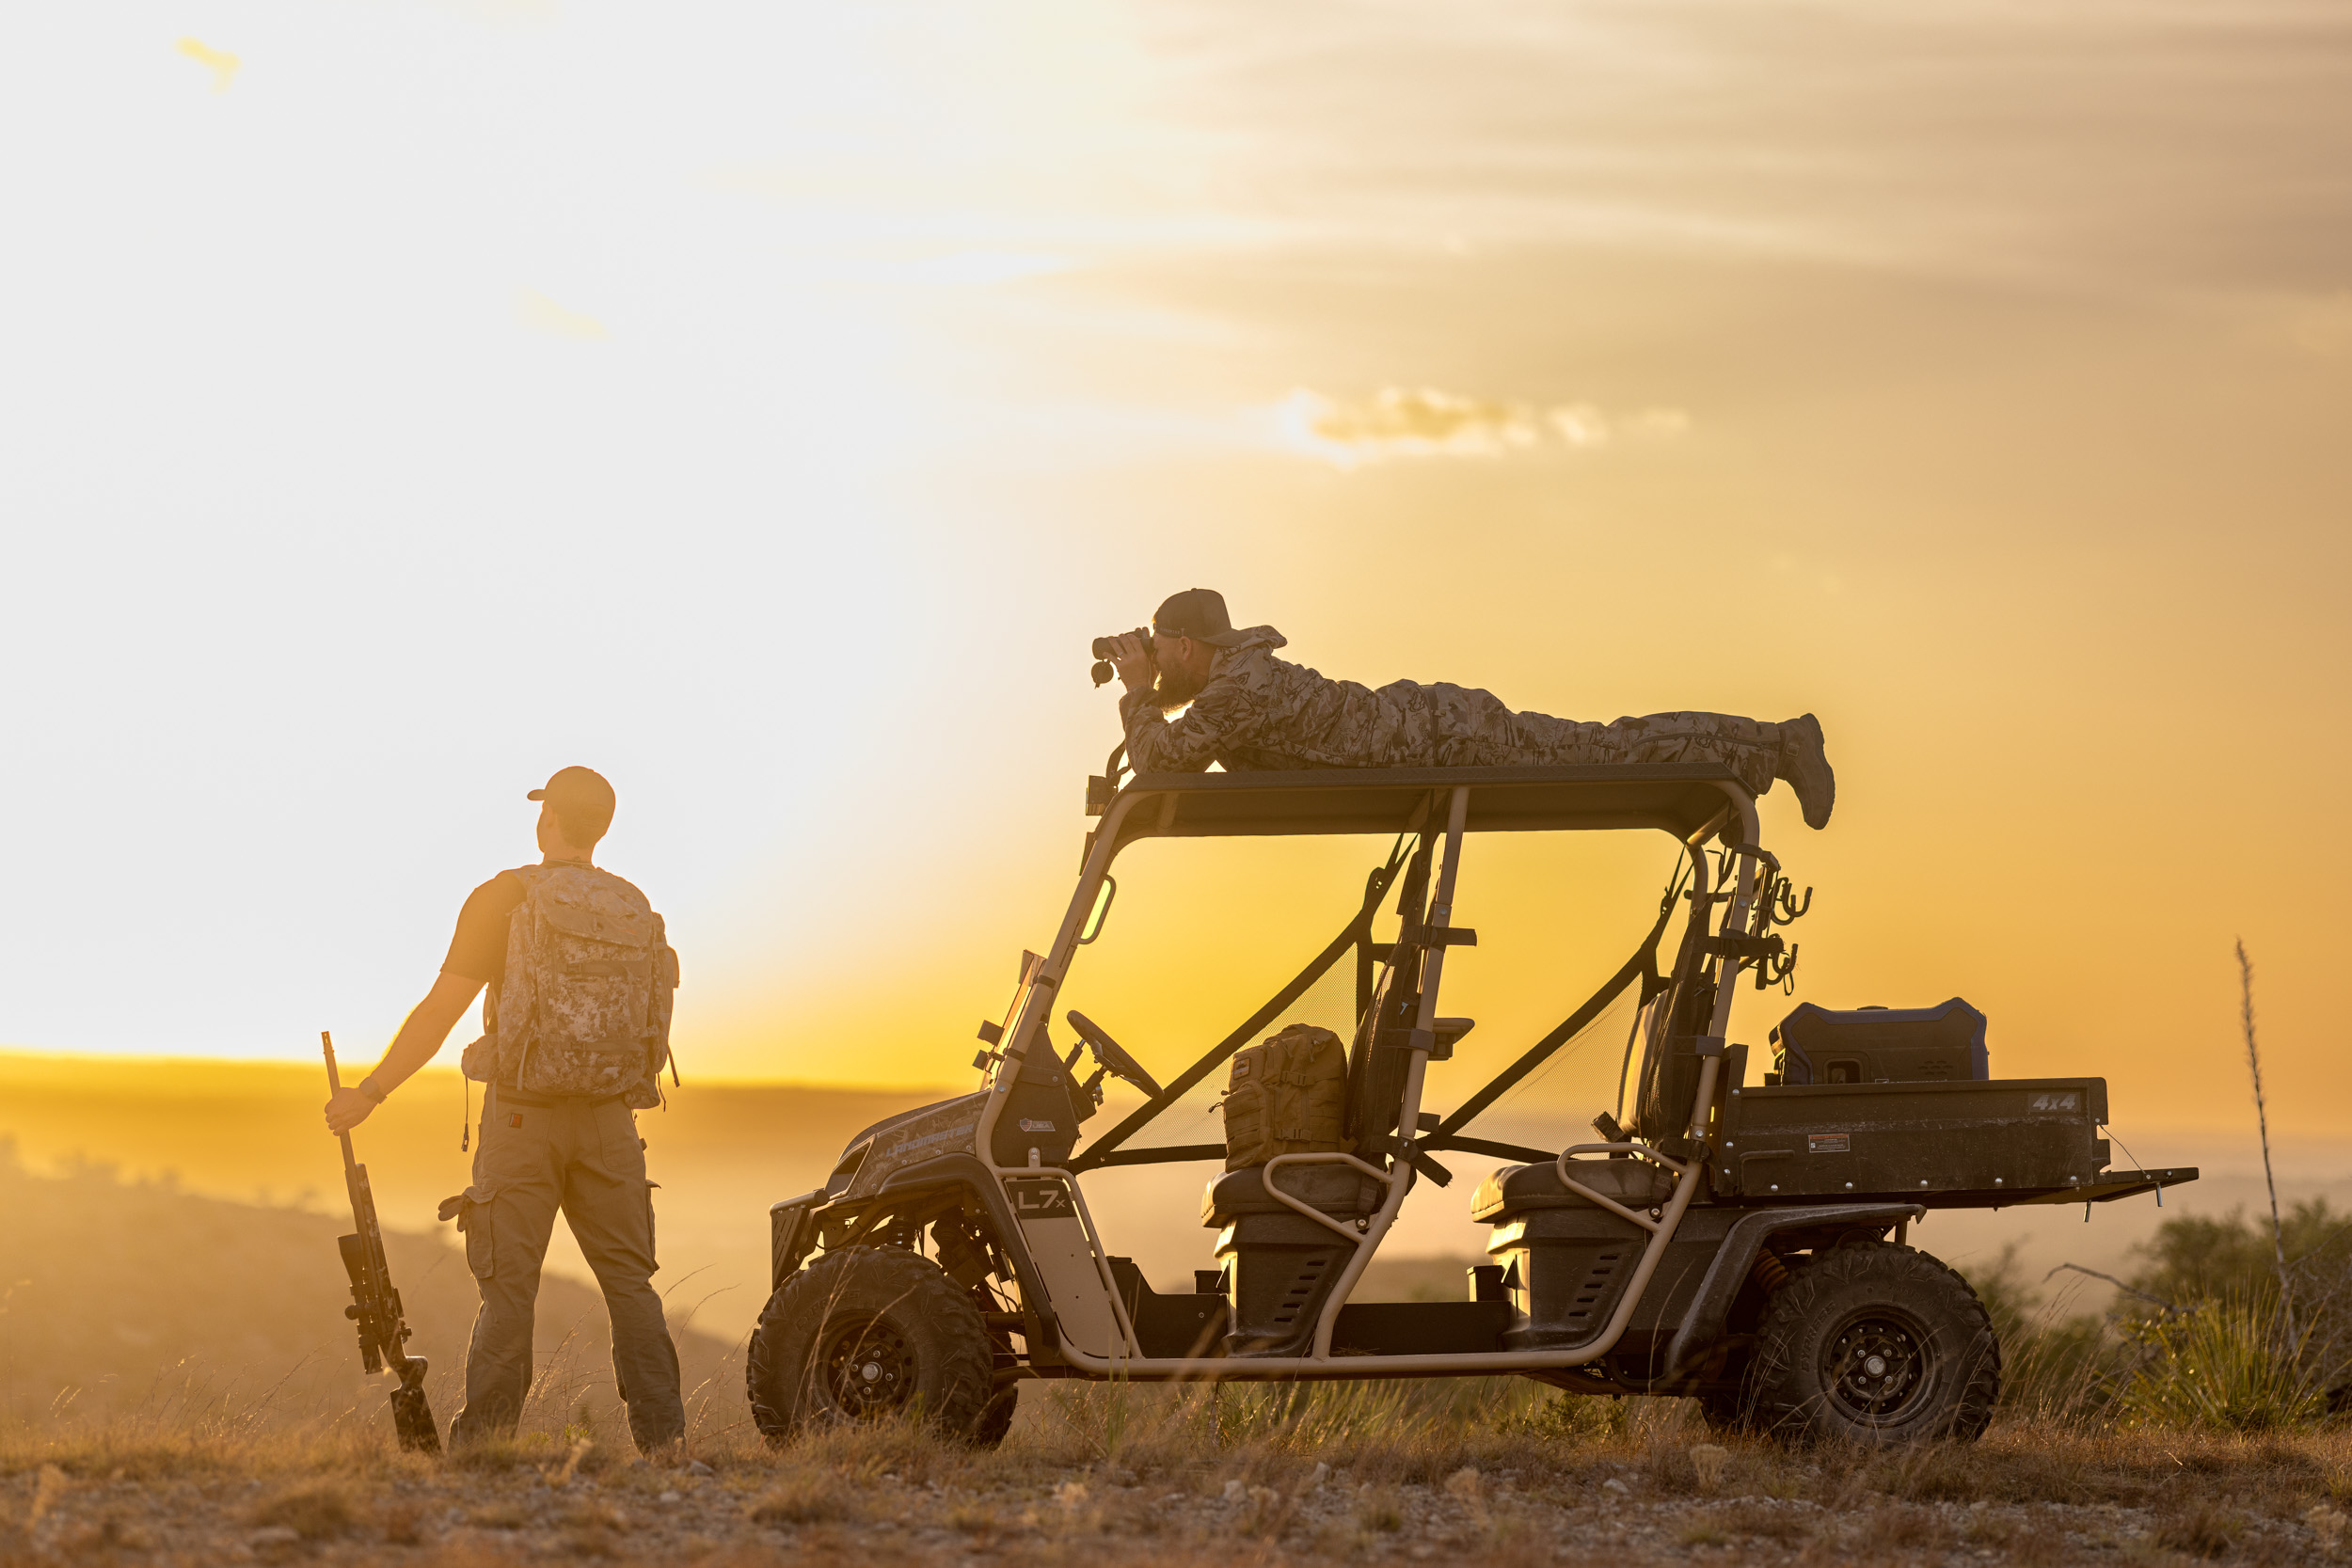 hunters on utv at sunset using binoculars and holding rifle